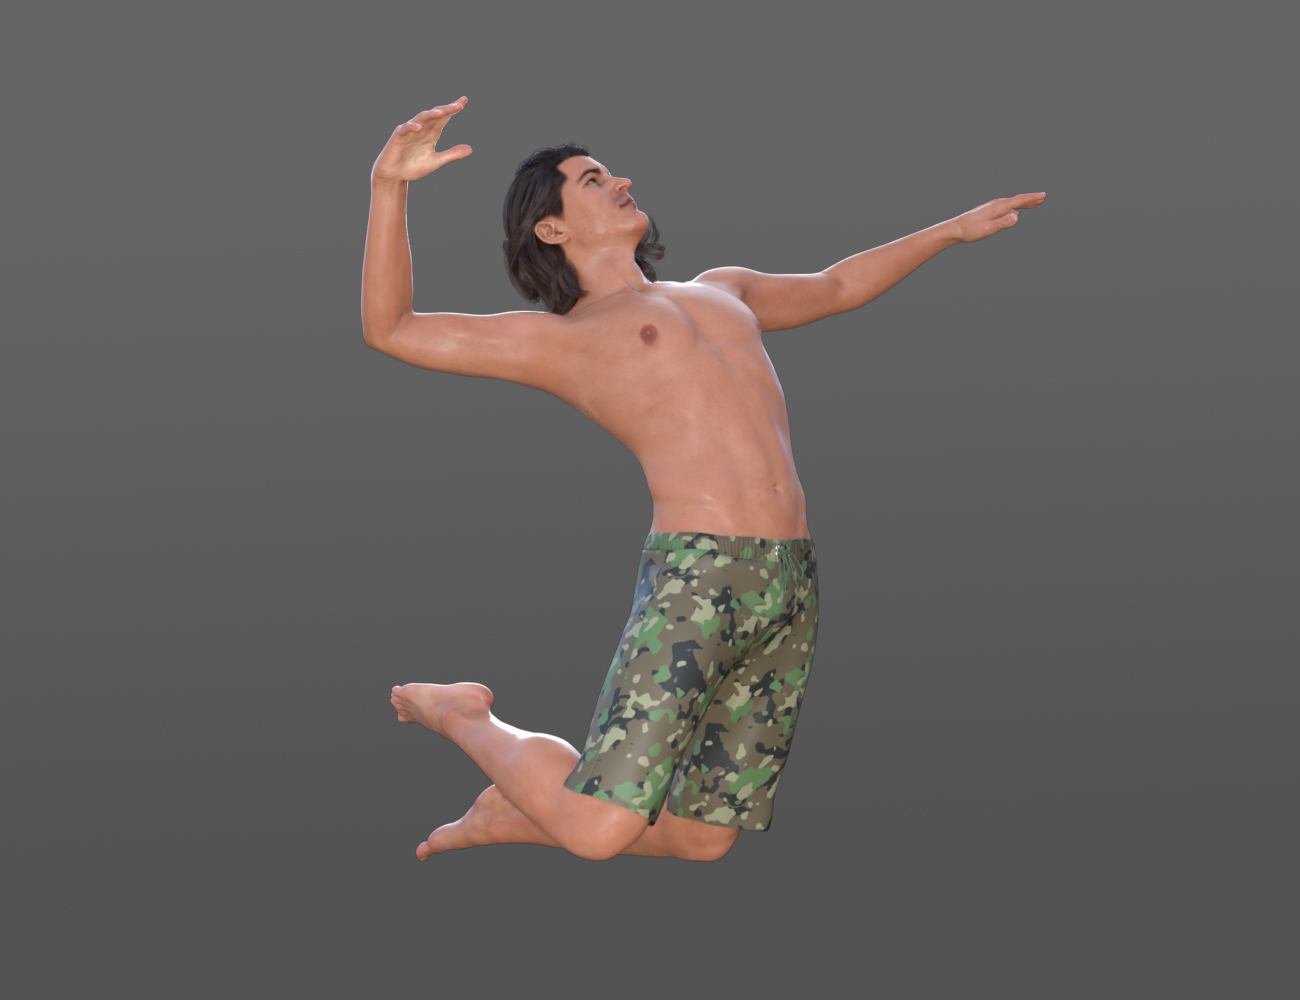 Volleyball Animations for Genesis 8 by: ThreeDigital, 3D Models by Daz 3D